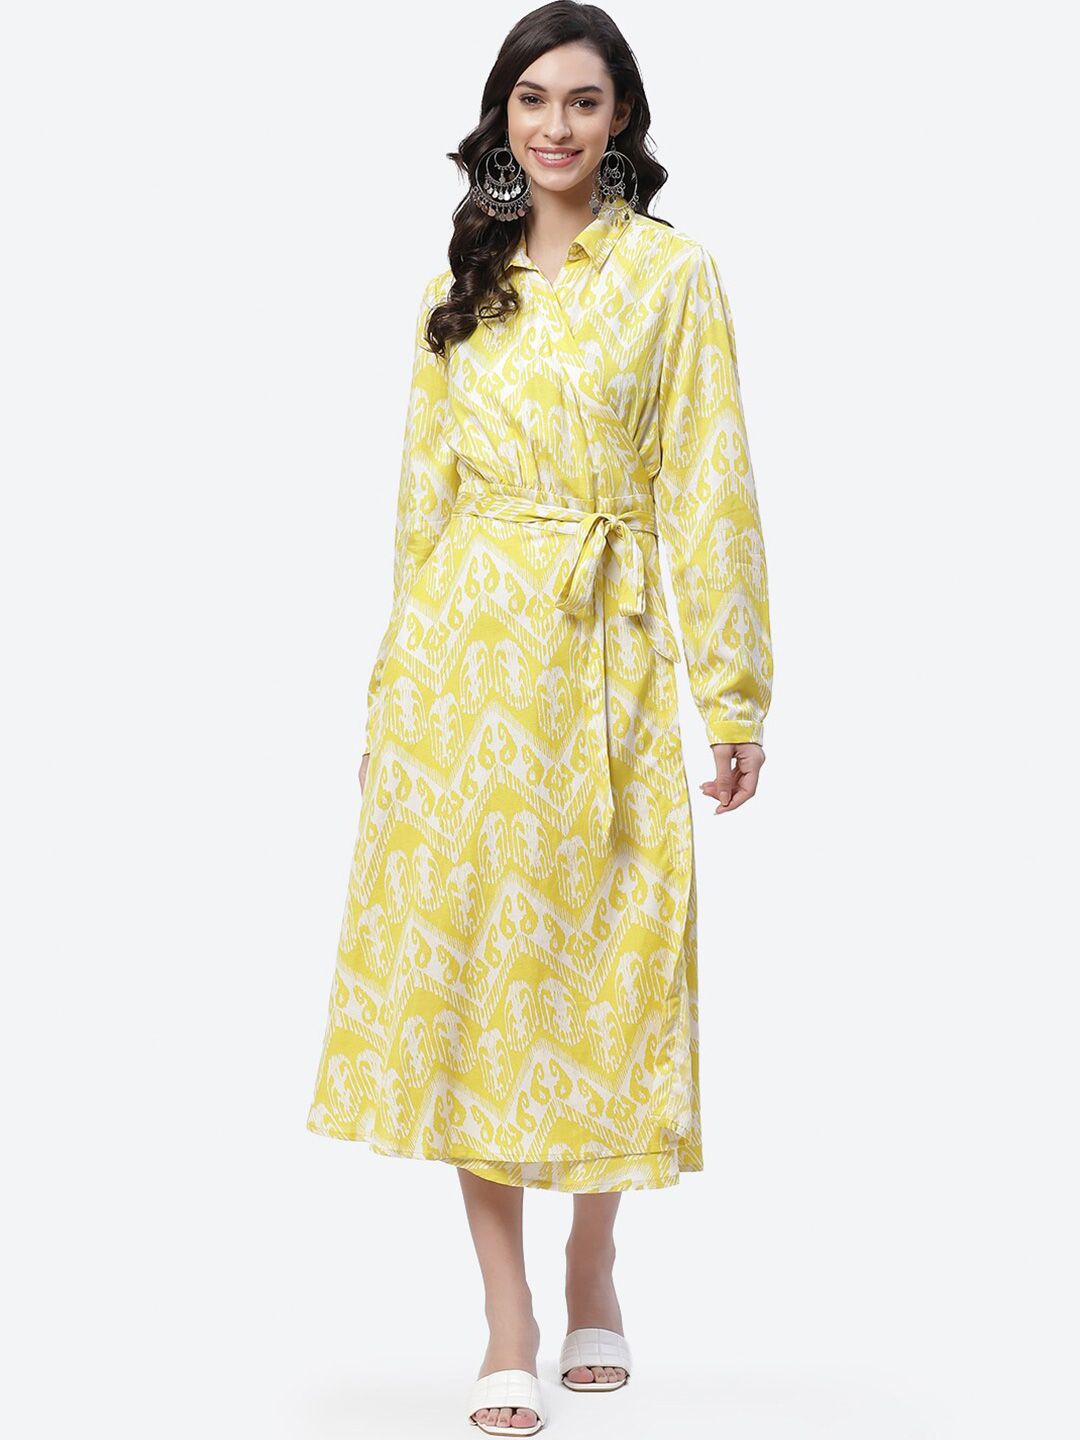 Biba Yellow Floral Ethnic A-Line Midi Dress Price in India